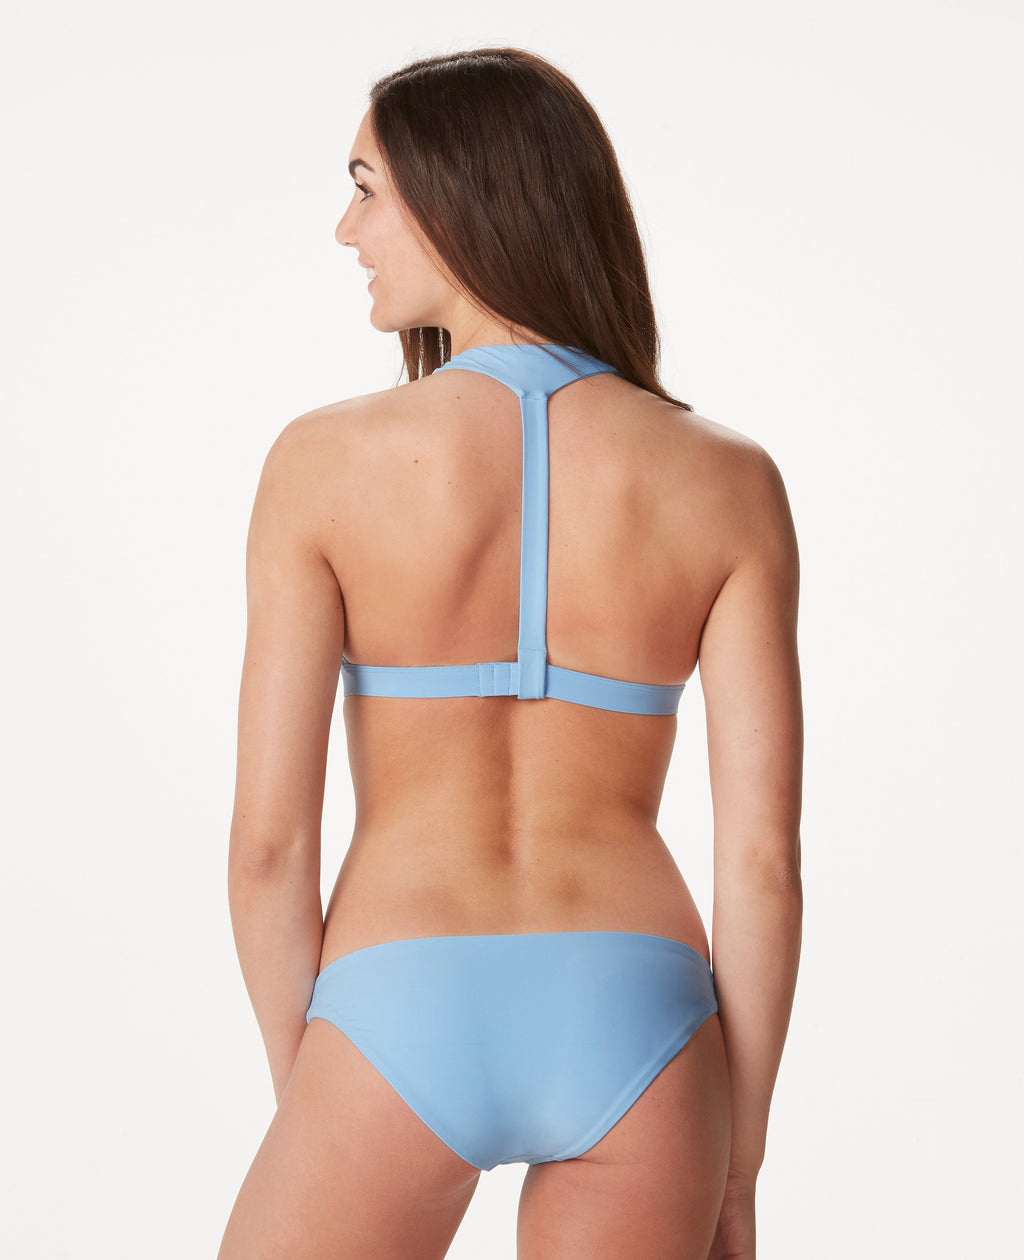 Woman in T-strap back light blue bikini against white background.